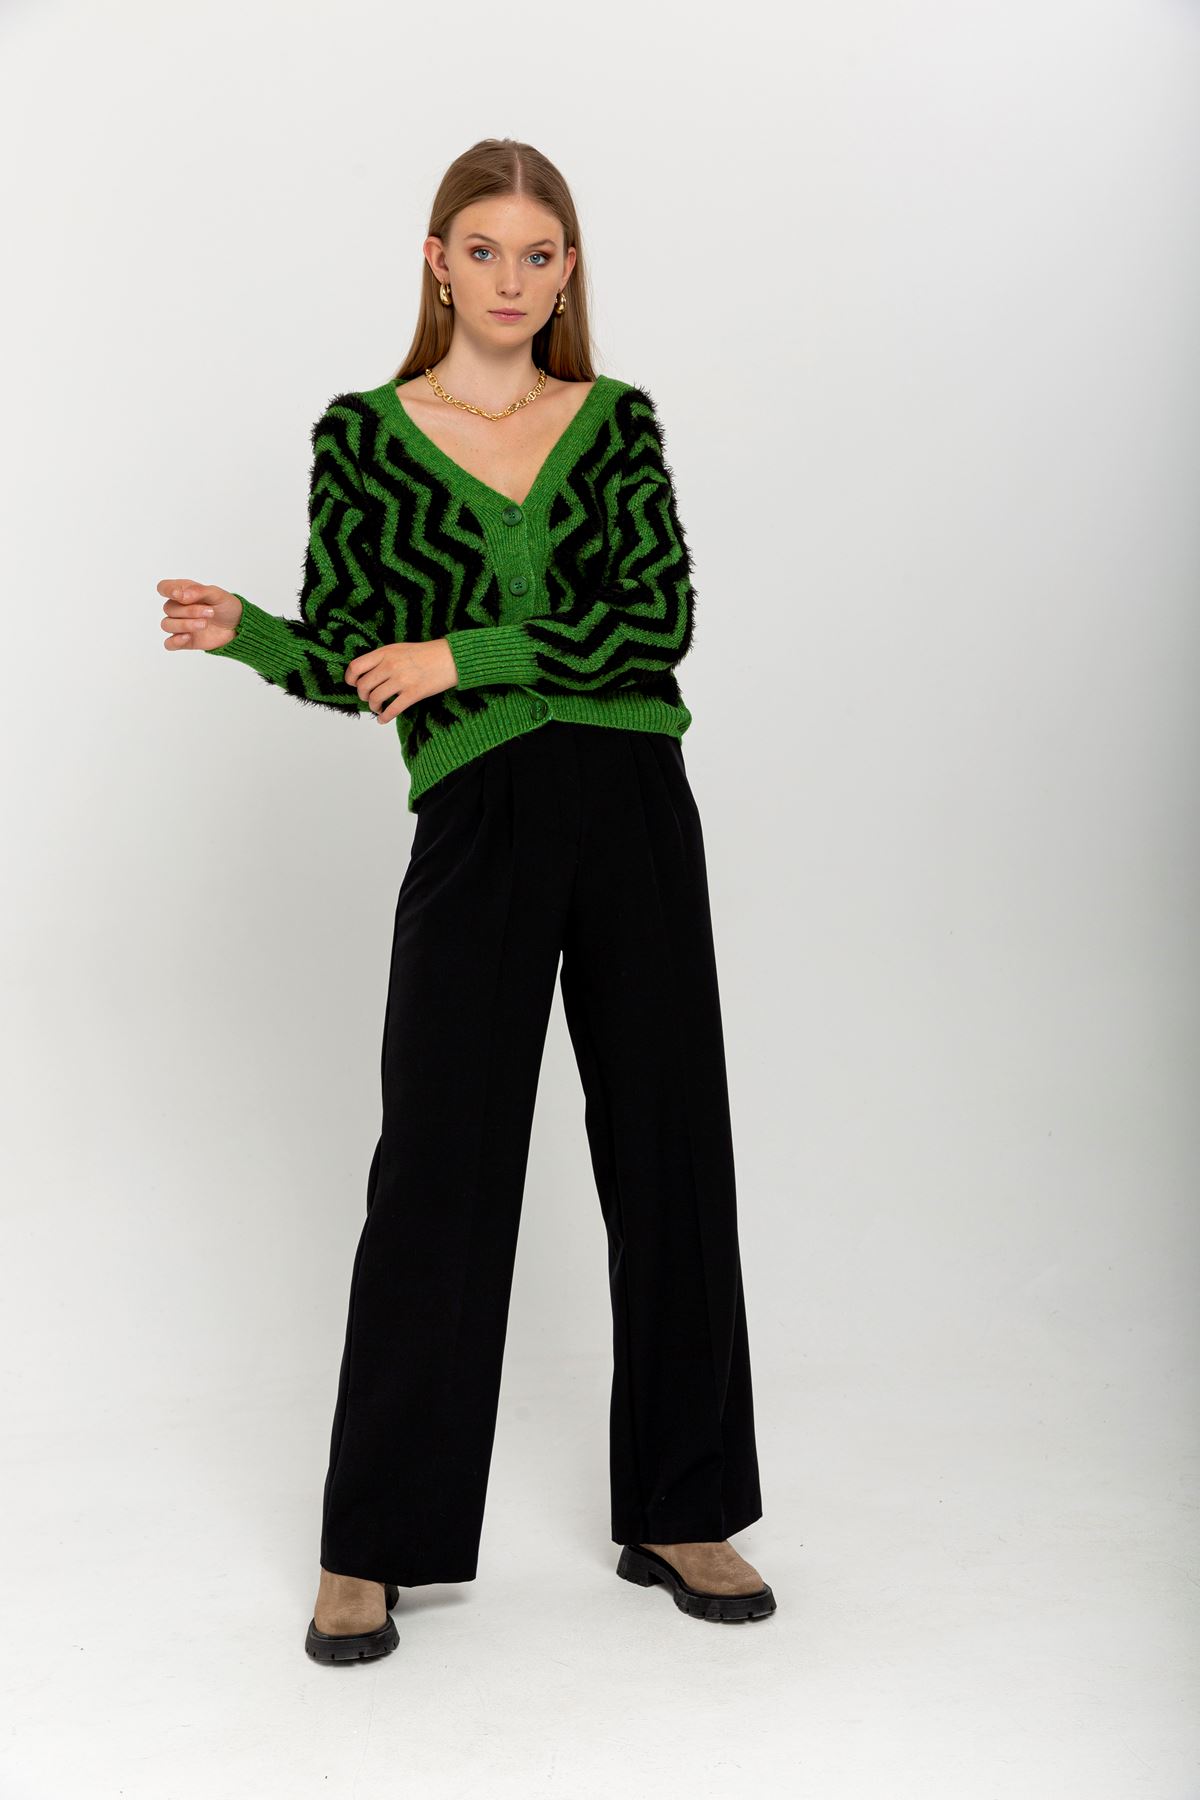 Knitwear Fabric Long Sleeve V-Neck Short Fringed Women Cardigan - Green